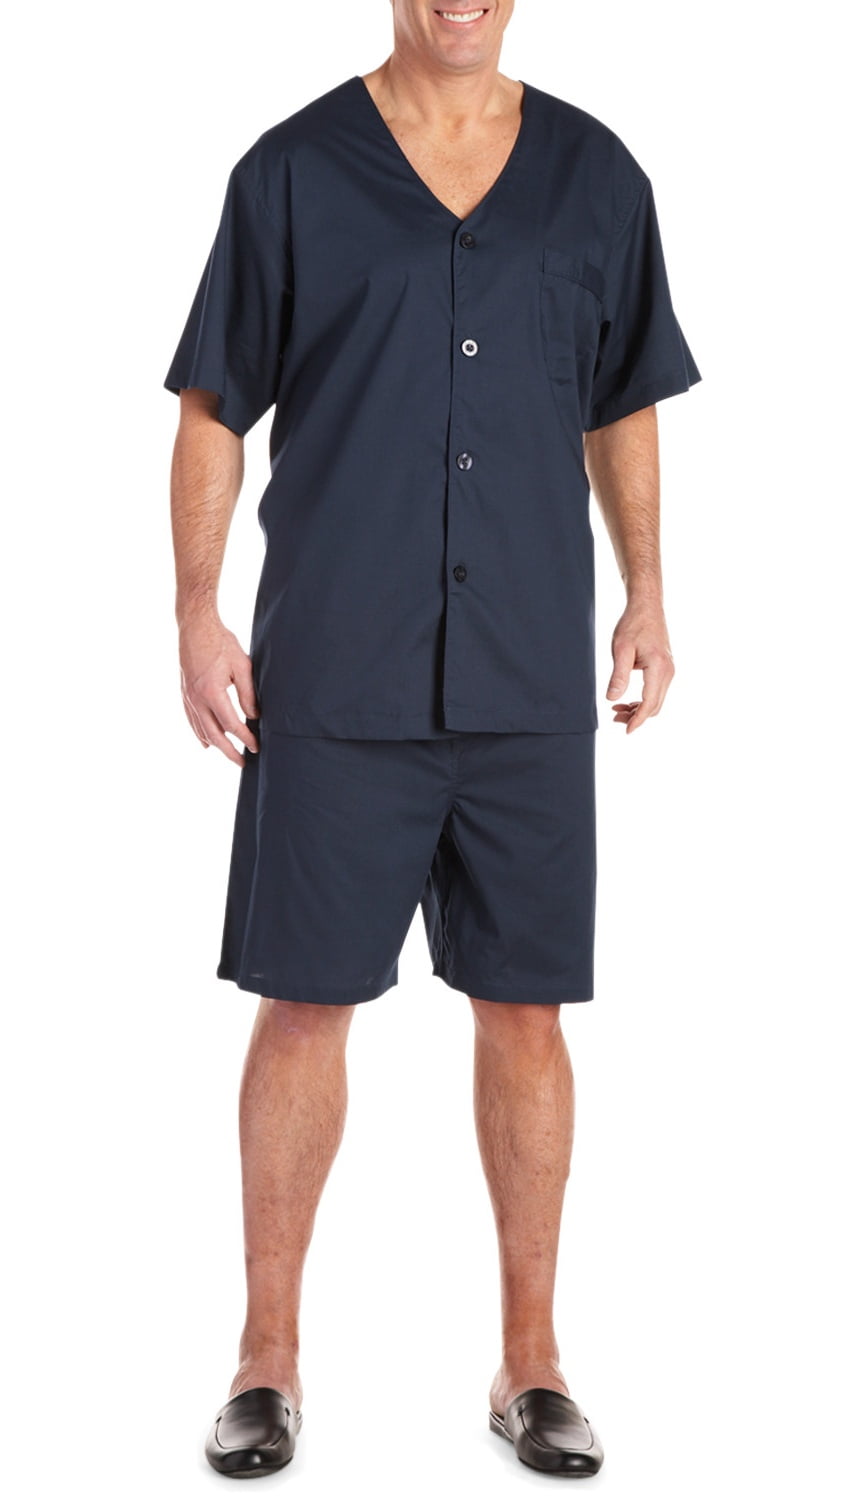 New Harbor Bay Men's Short Sleeve Short Leg Pajama Set Size 5XL Blue 2 PC NWT 